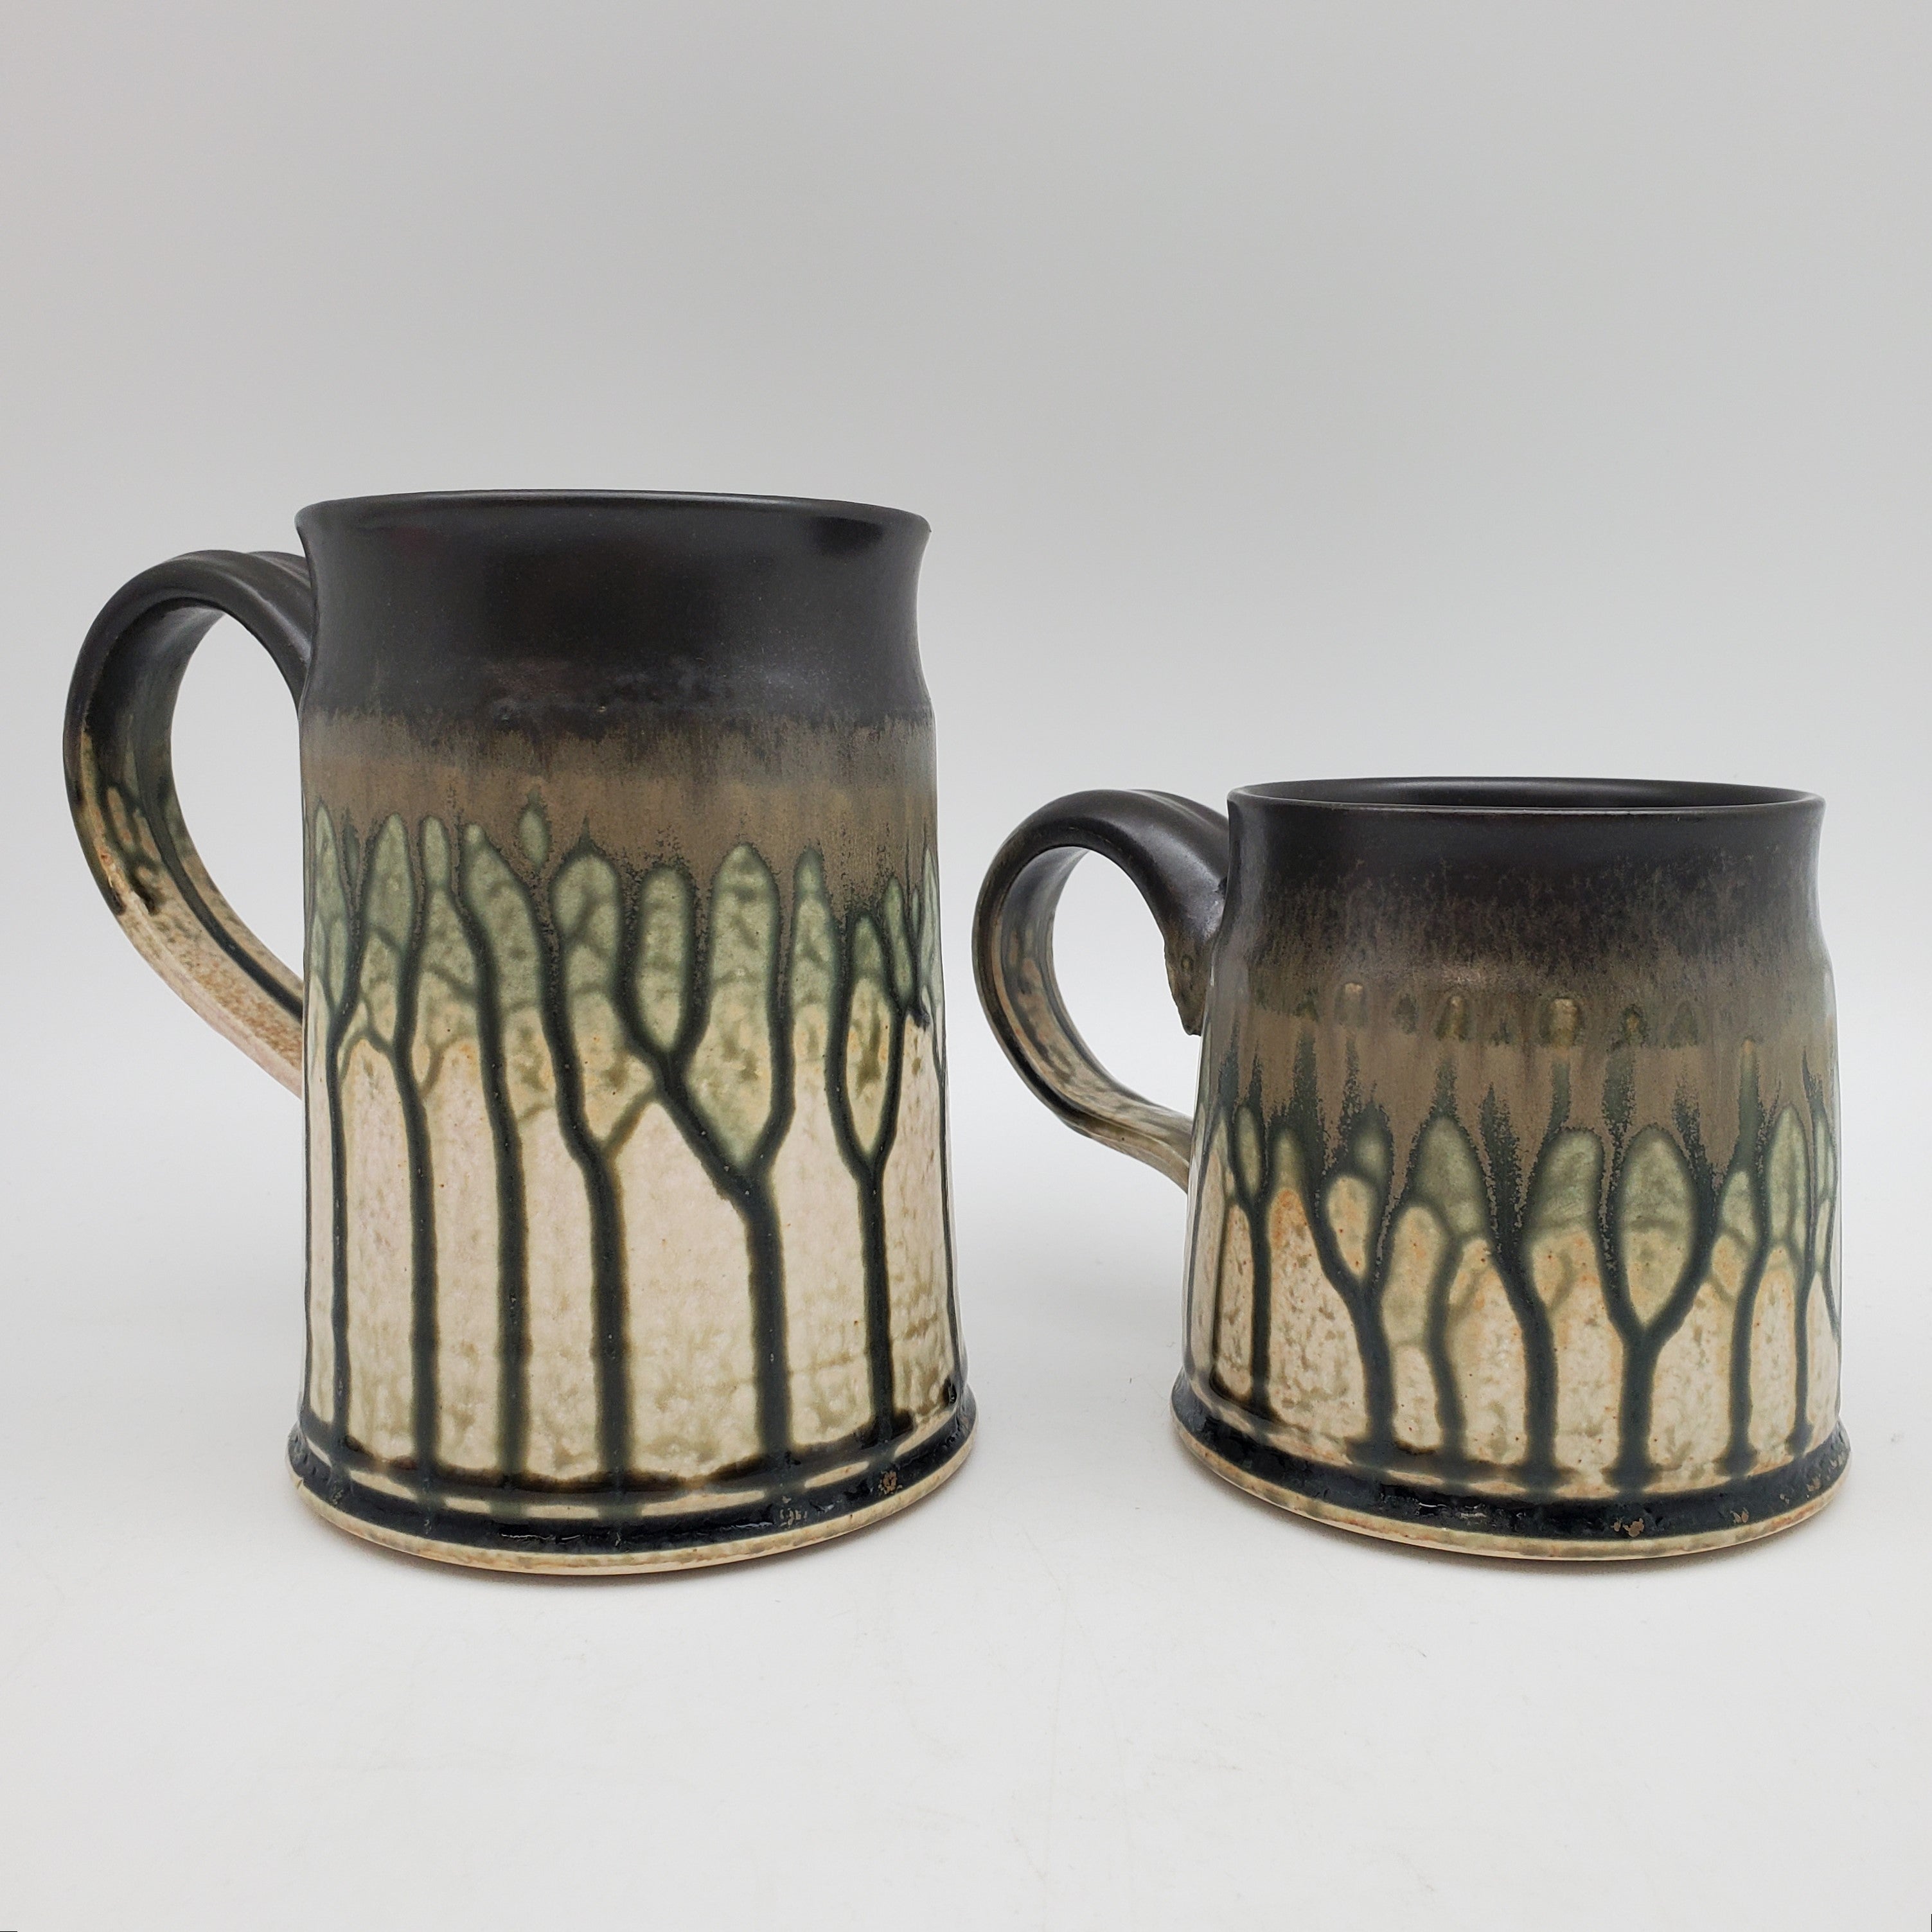 Stoneware Mug - Green